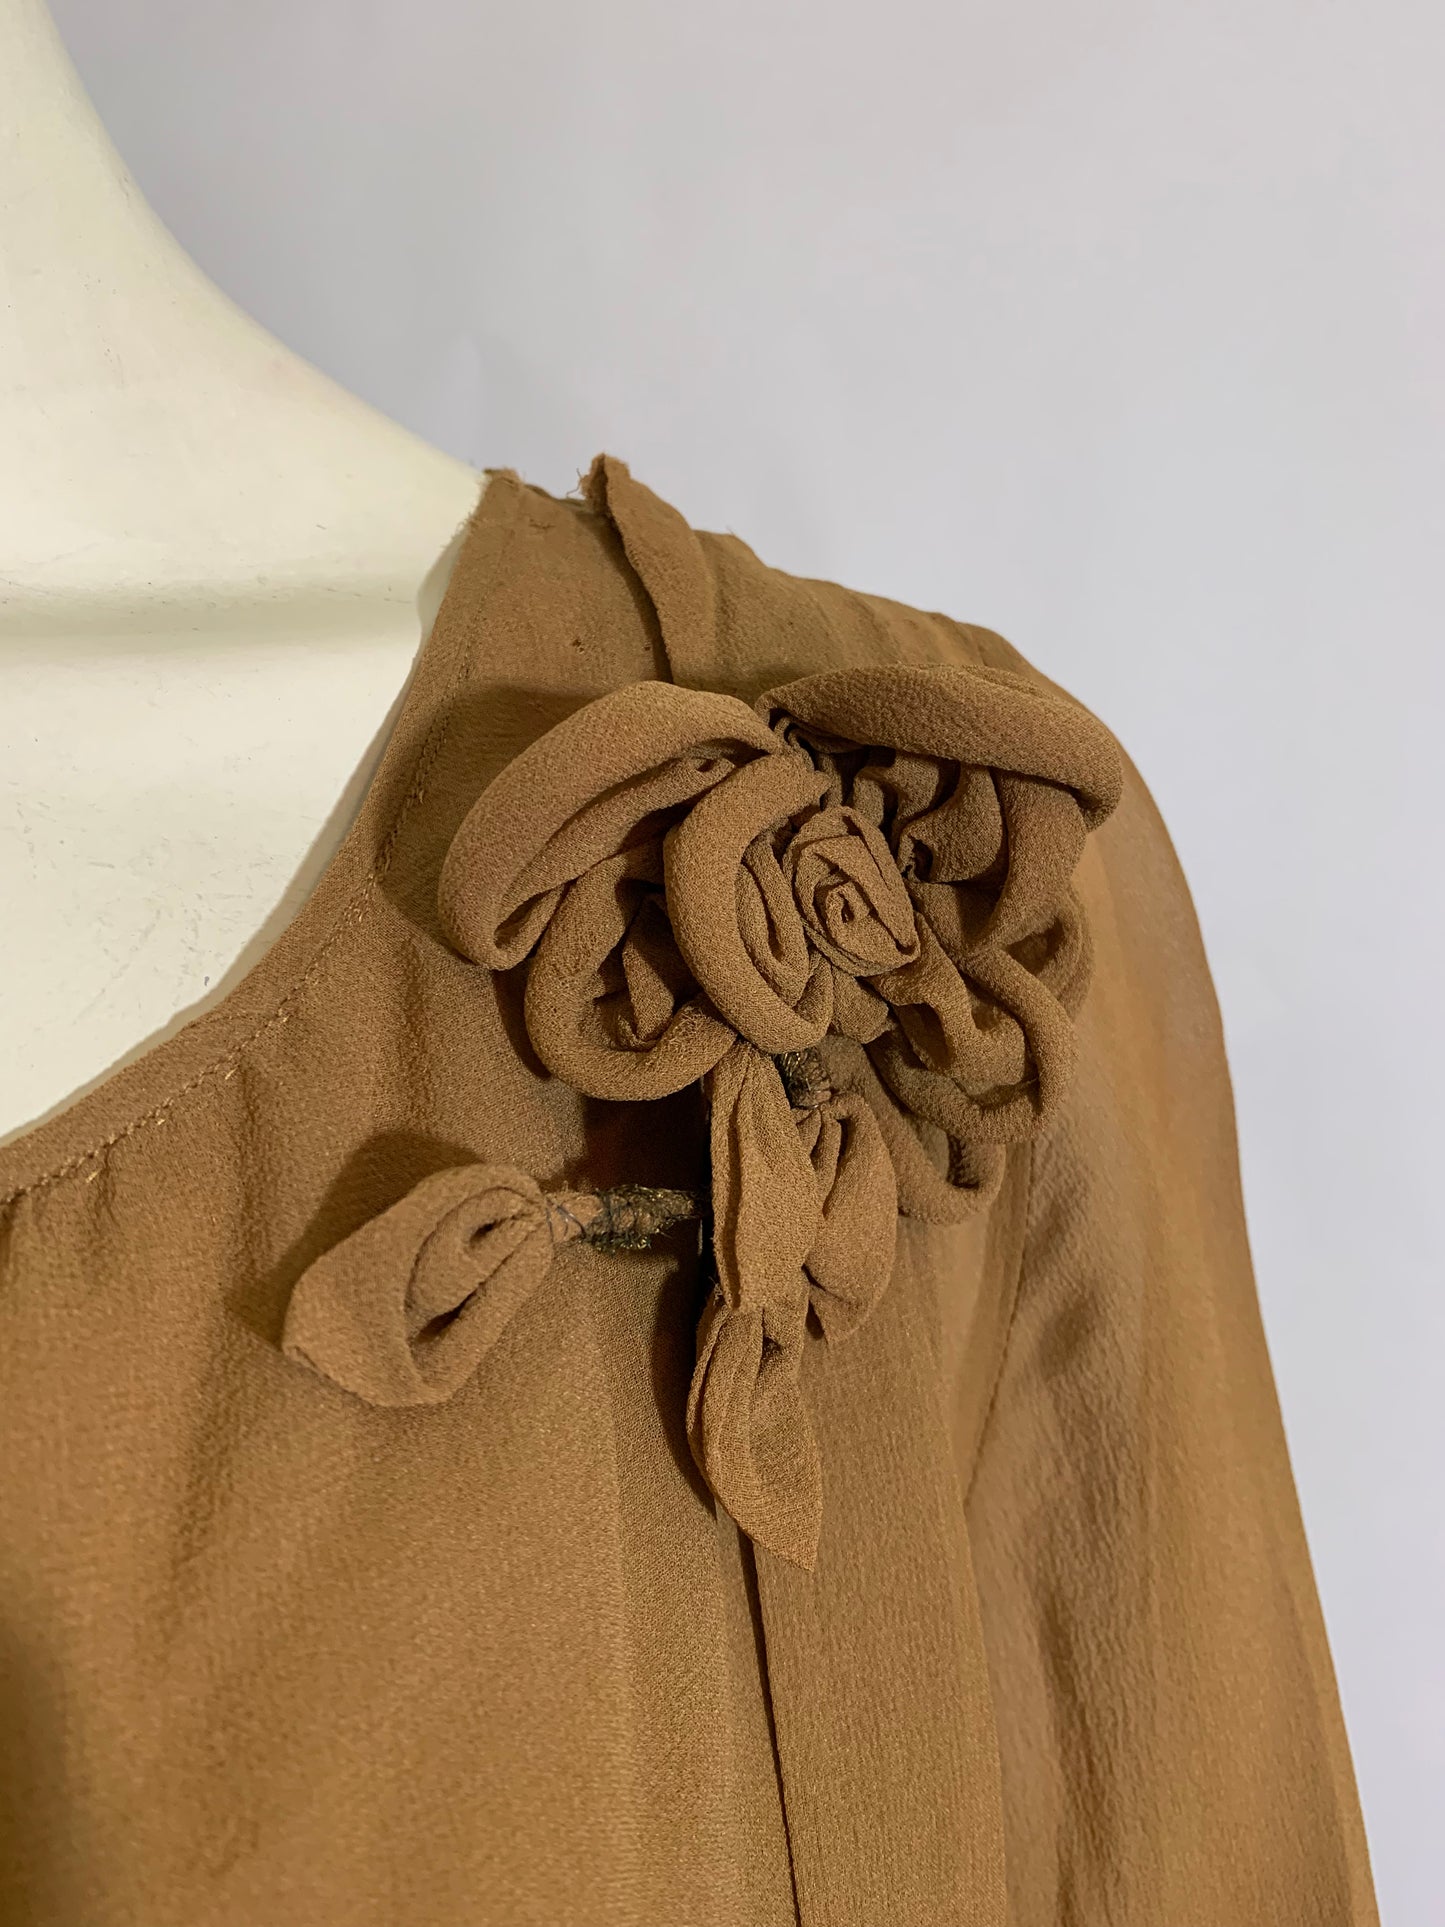 Cinnamon Silk Blouson Dropped Waist Beaded Dress circa 1920s